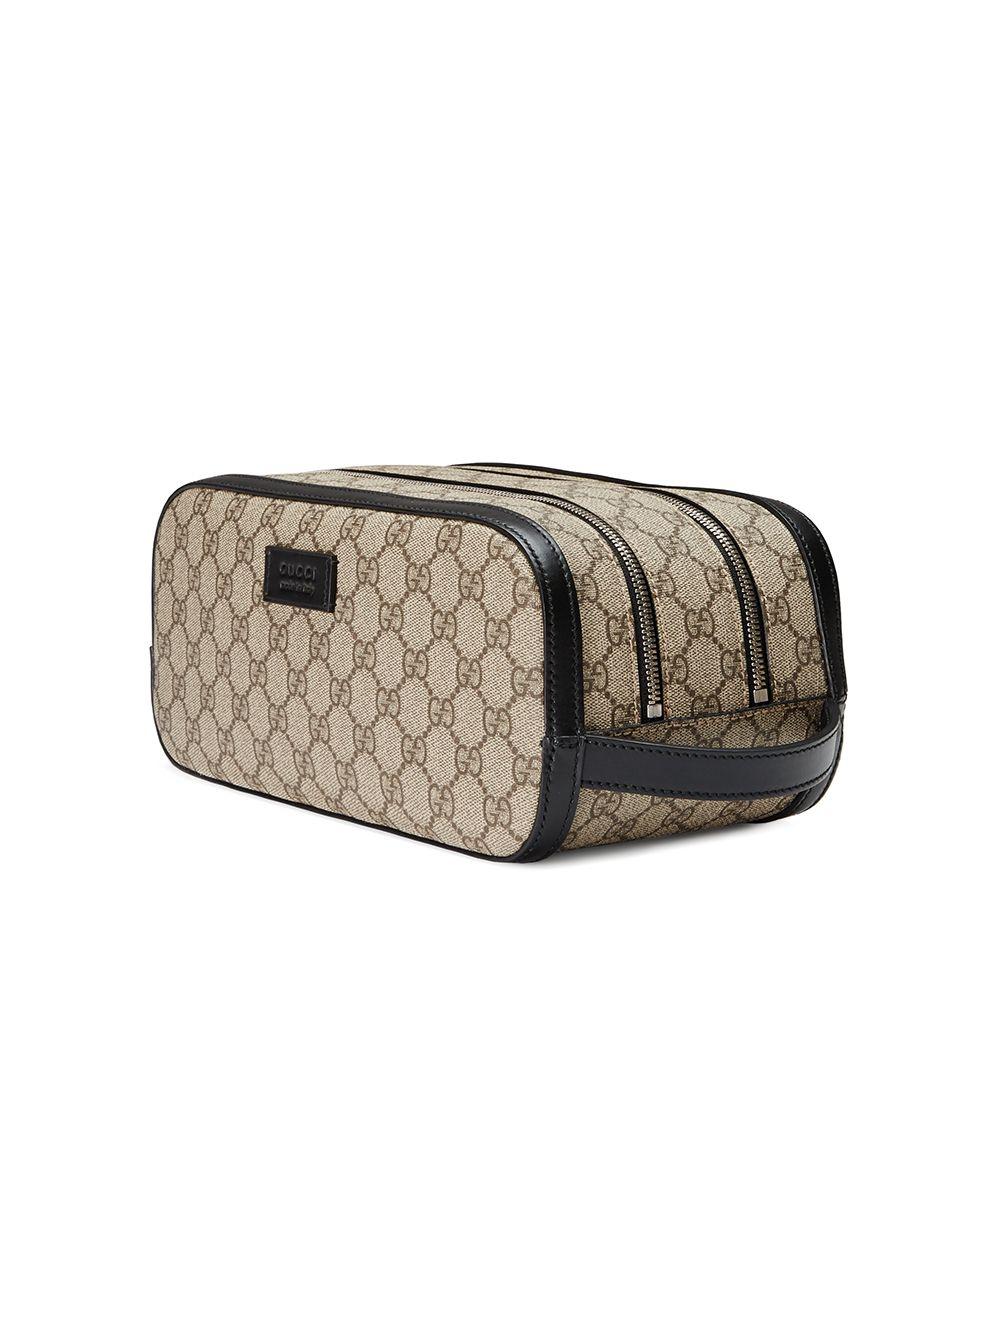 Gucci GG Supreme toiletry case  Toiletry bag women, Mens toiletry bag,  Designer travel bags